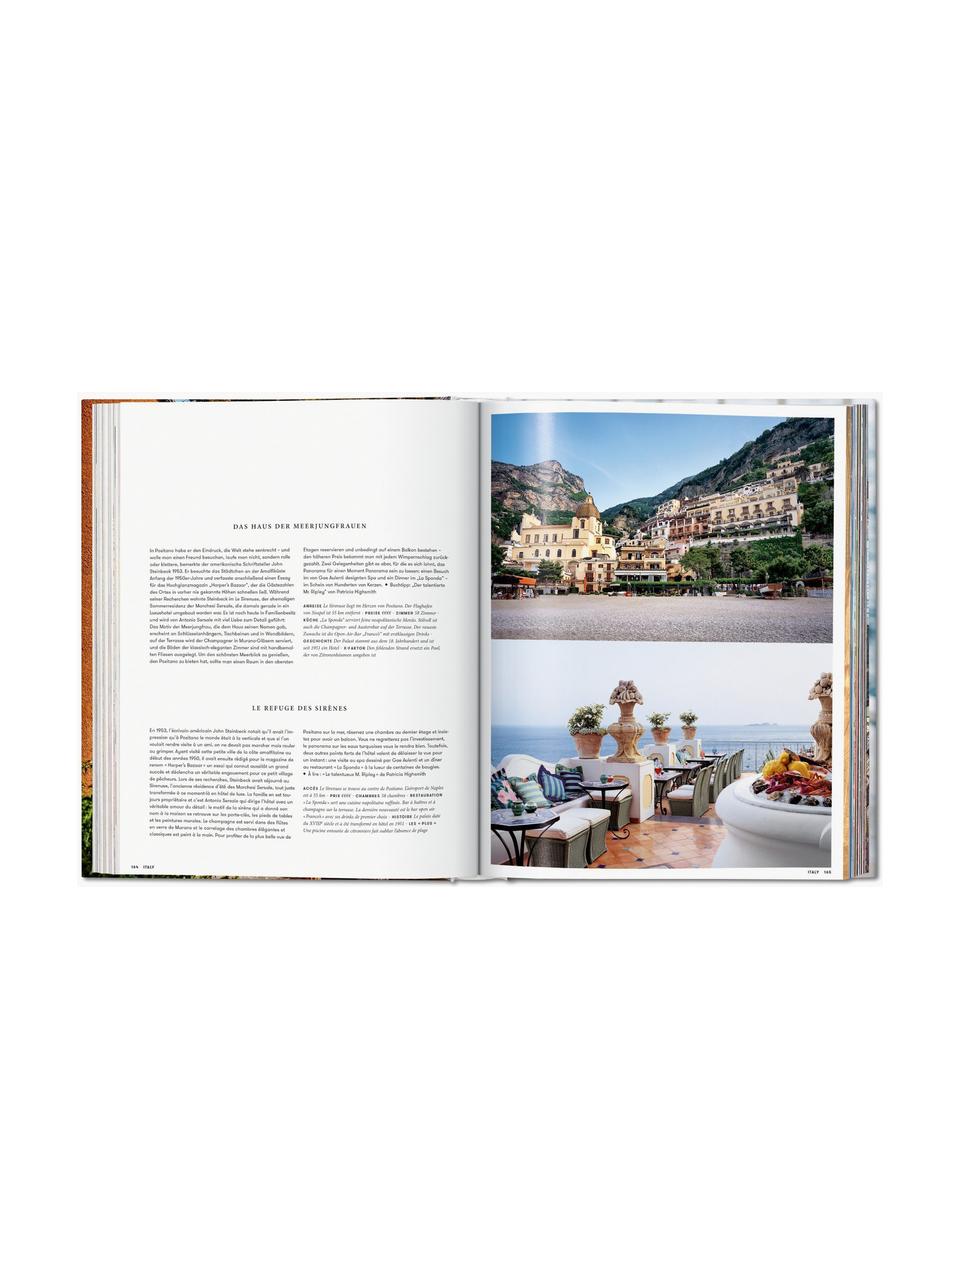 Libro illustrato Great Escapes Mediterranean, Carta, copertina rigida, Mediterranean, Larg. 24 x Alt. 30 cm